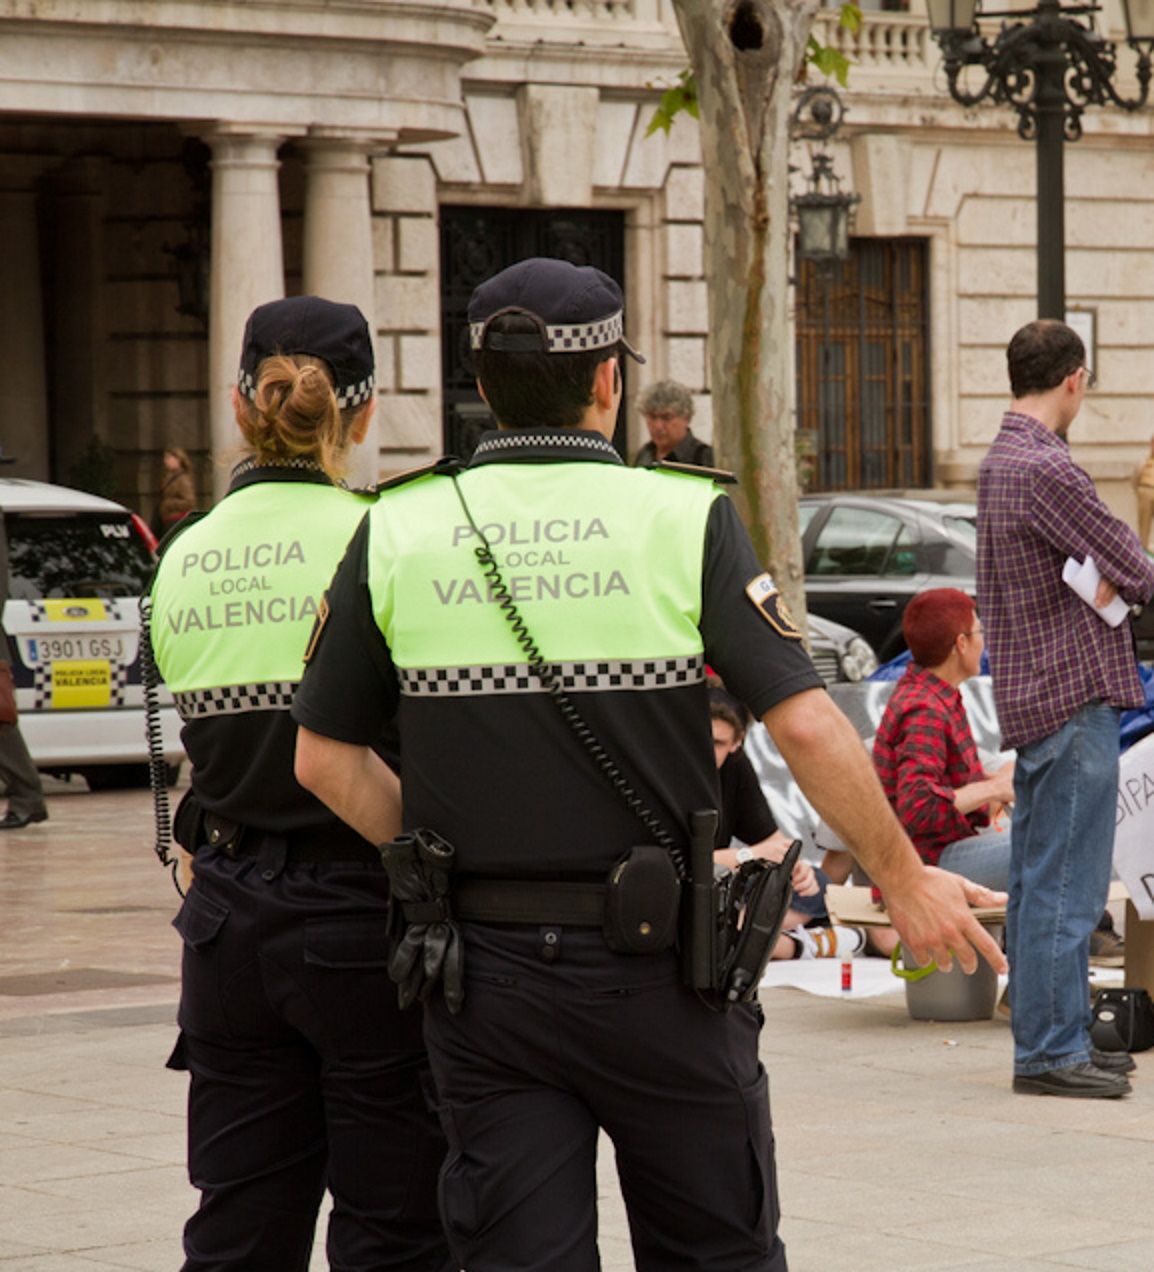 Policia València / Adolfo Senabre - Wikimedia Commons